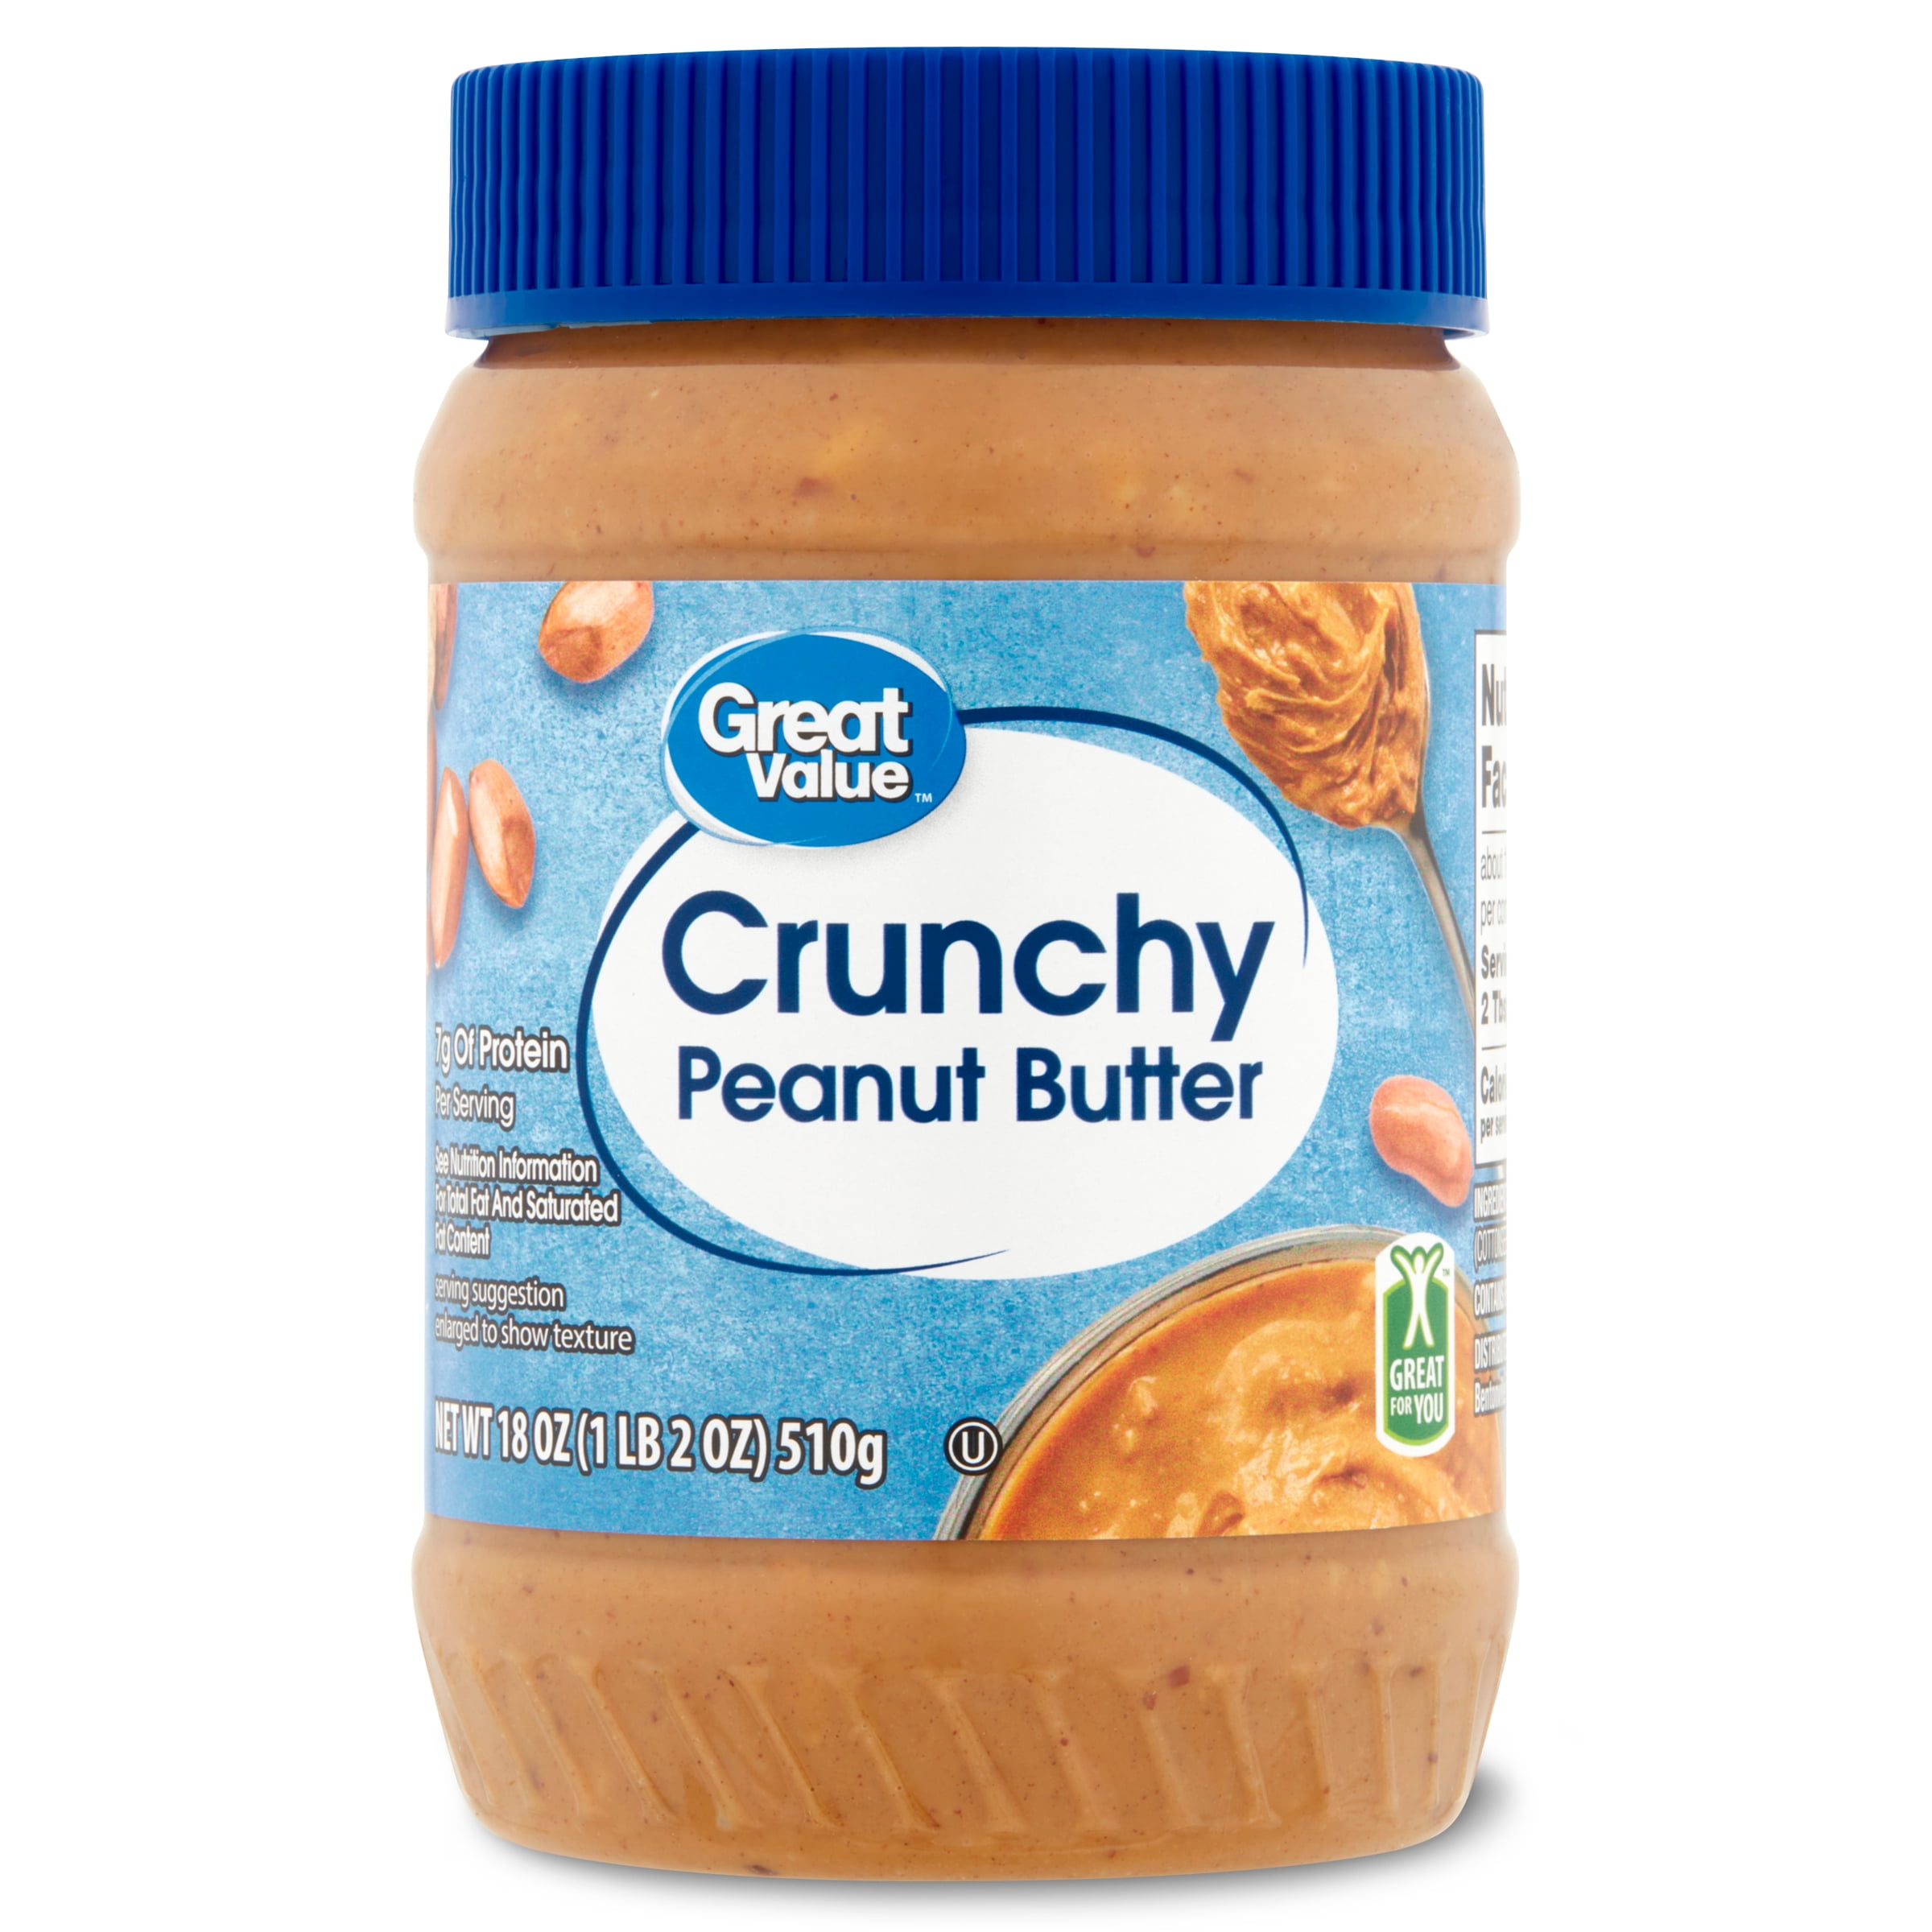 Great Value Crunchy Peanut Butter, 18 oz